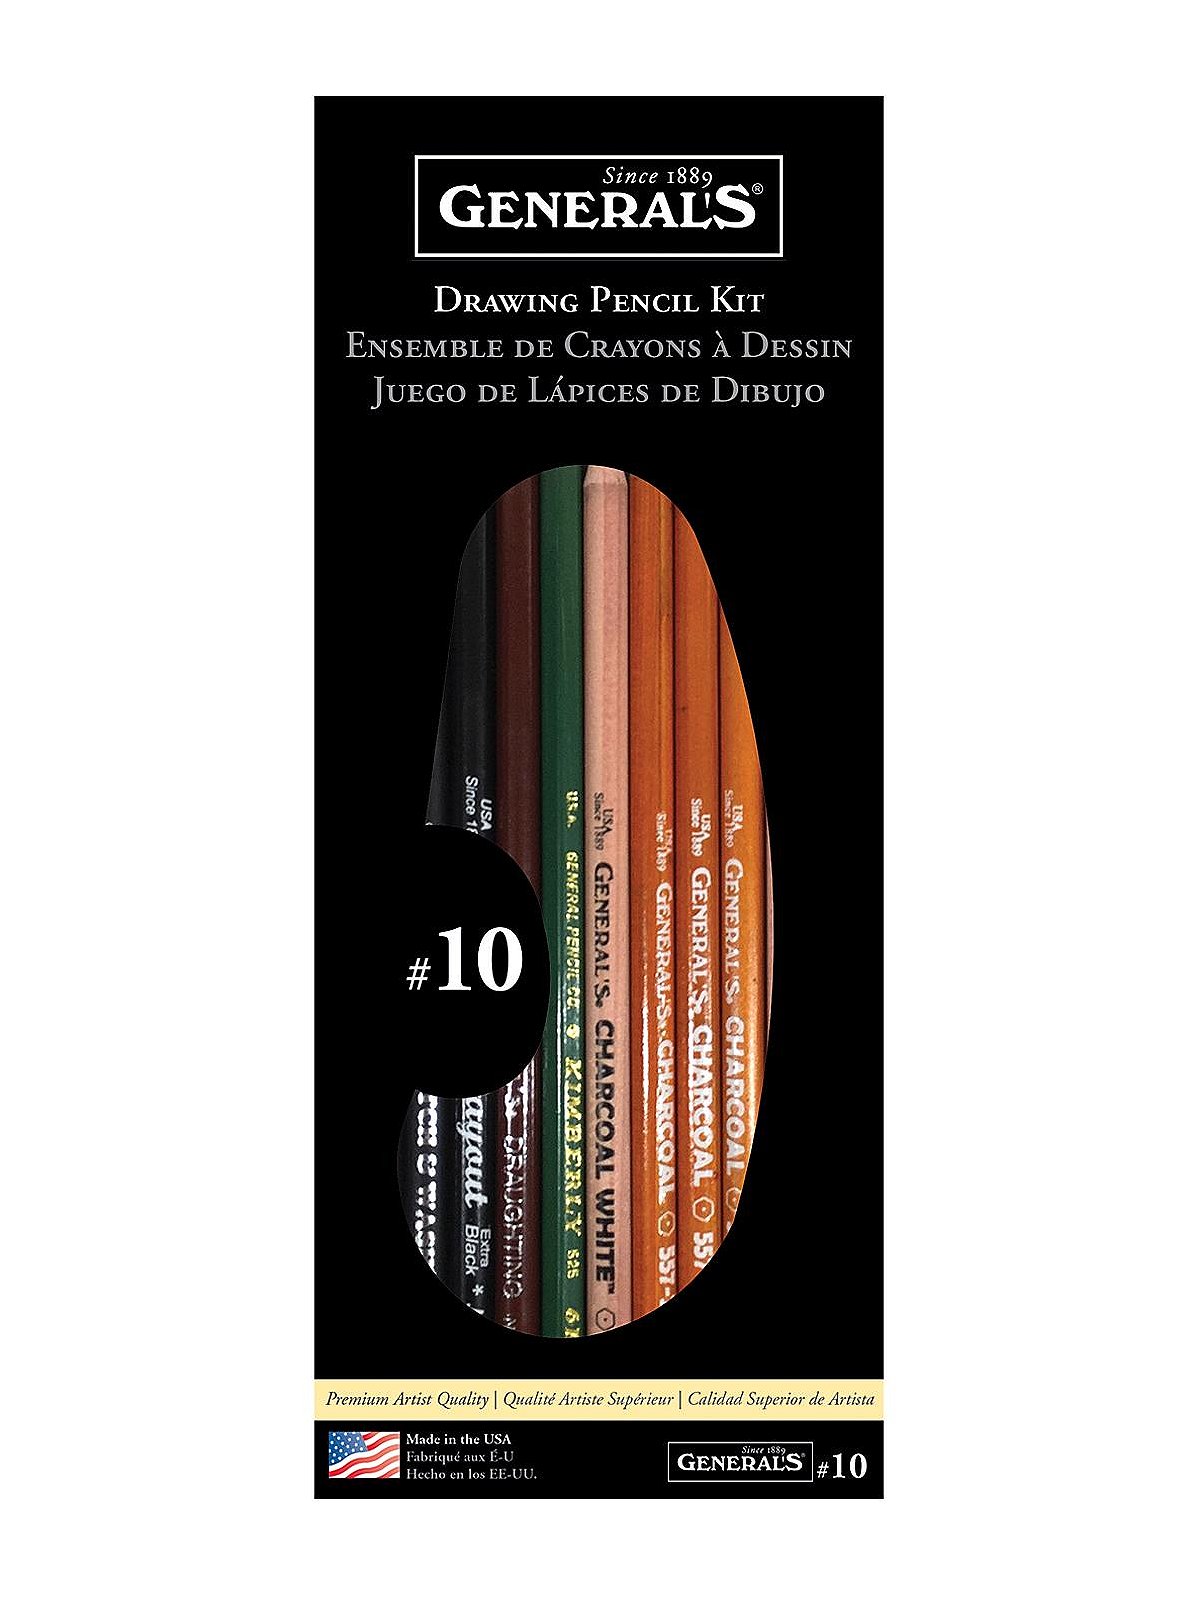 General's Drawing Pencil Kit #10